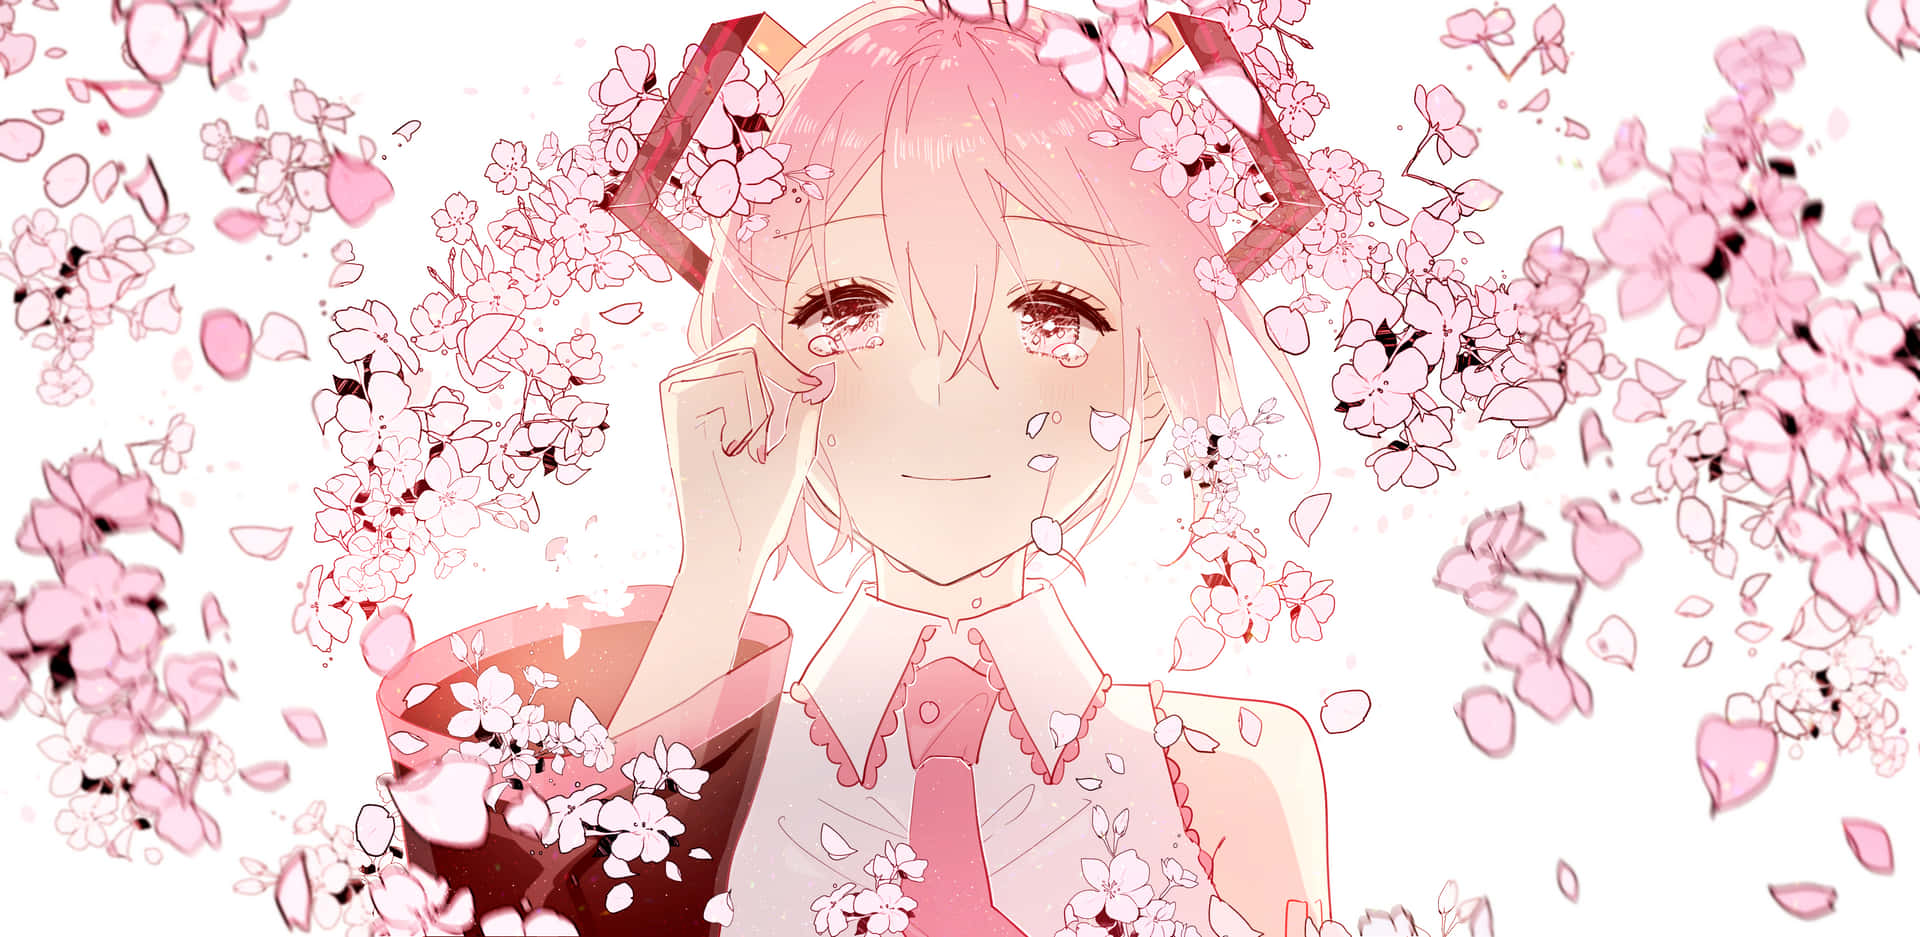 Sakura Miku - Idolen af Kirsebærtræer Wallpaper